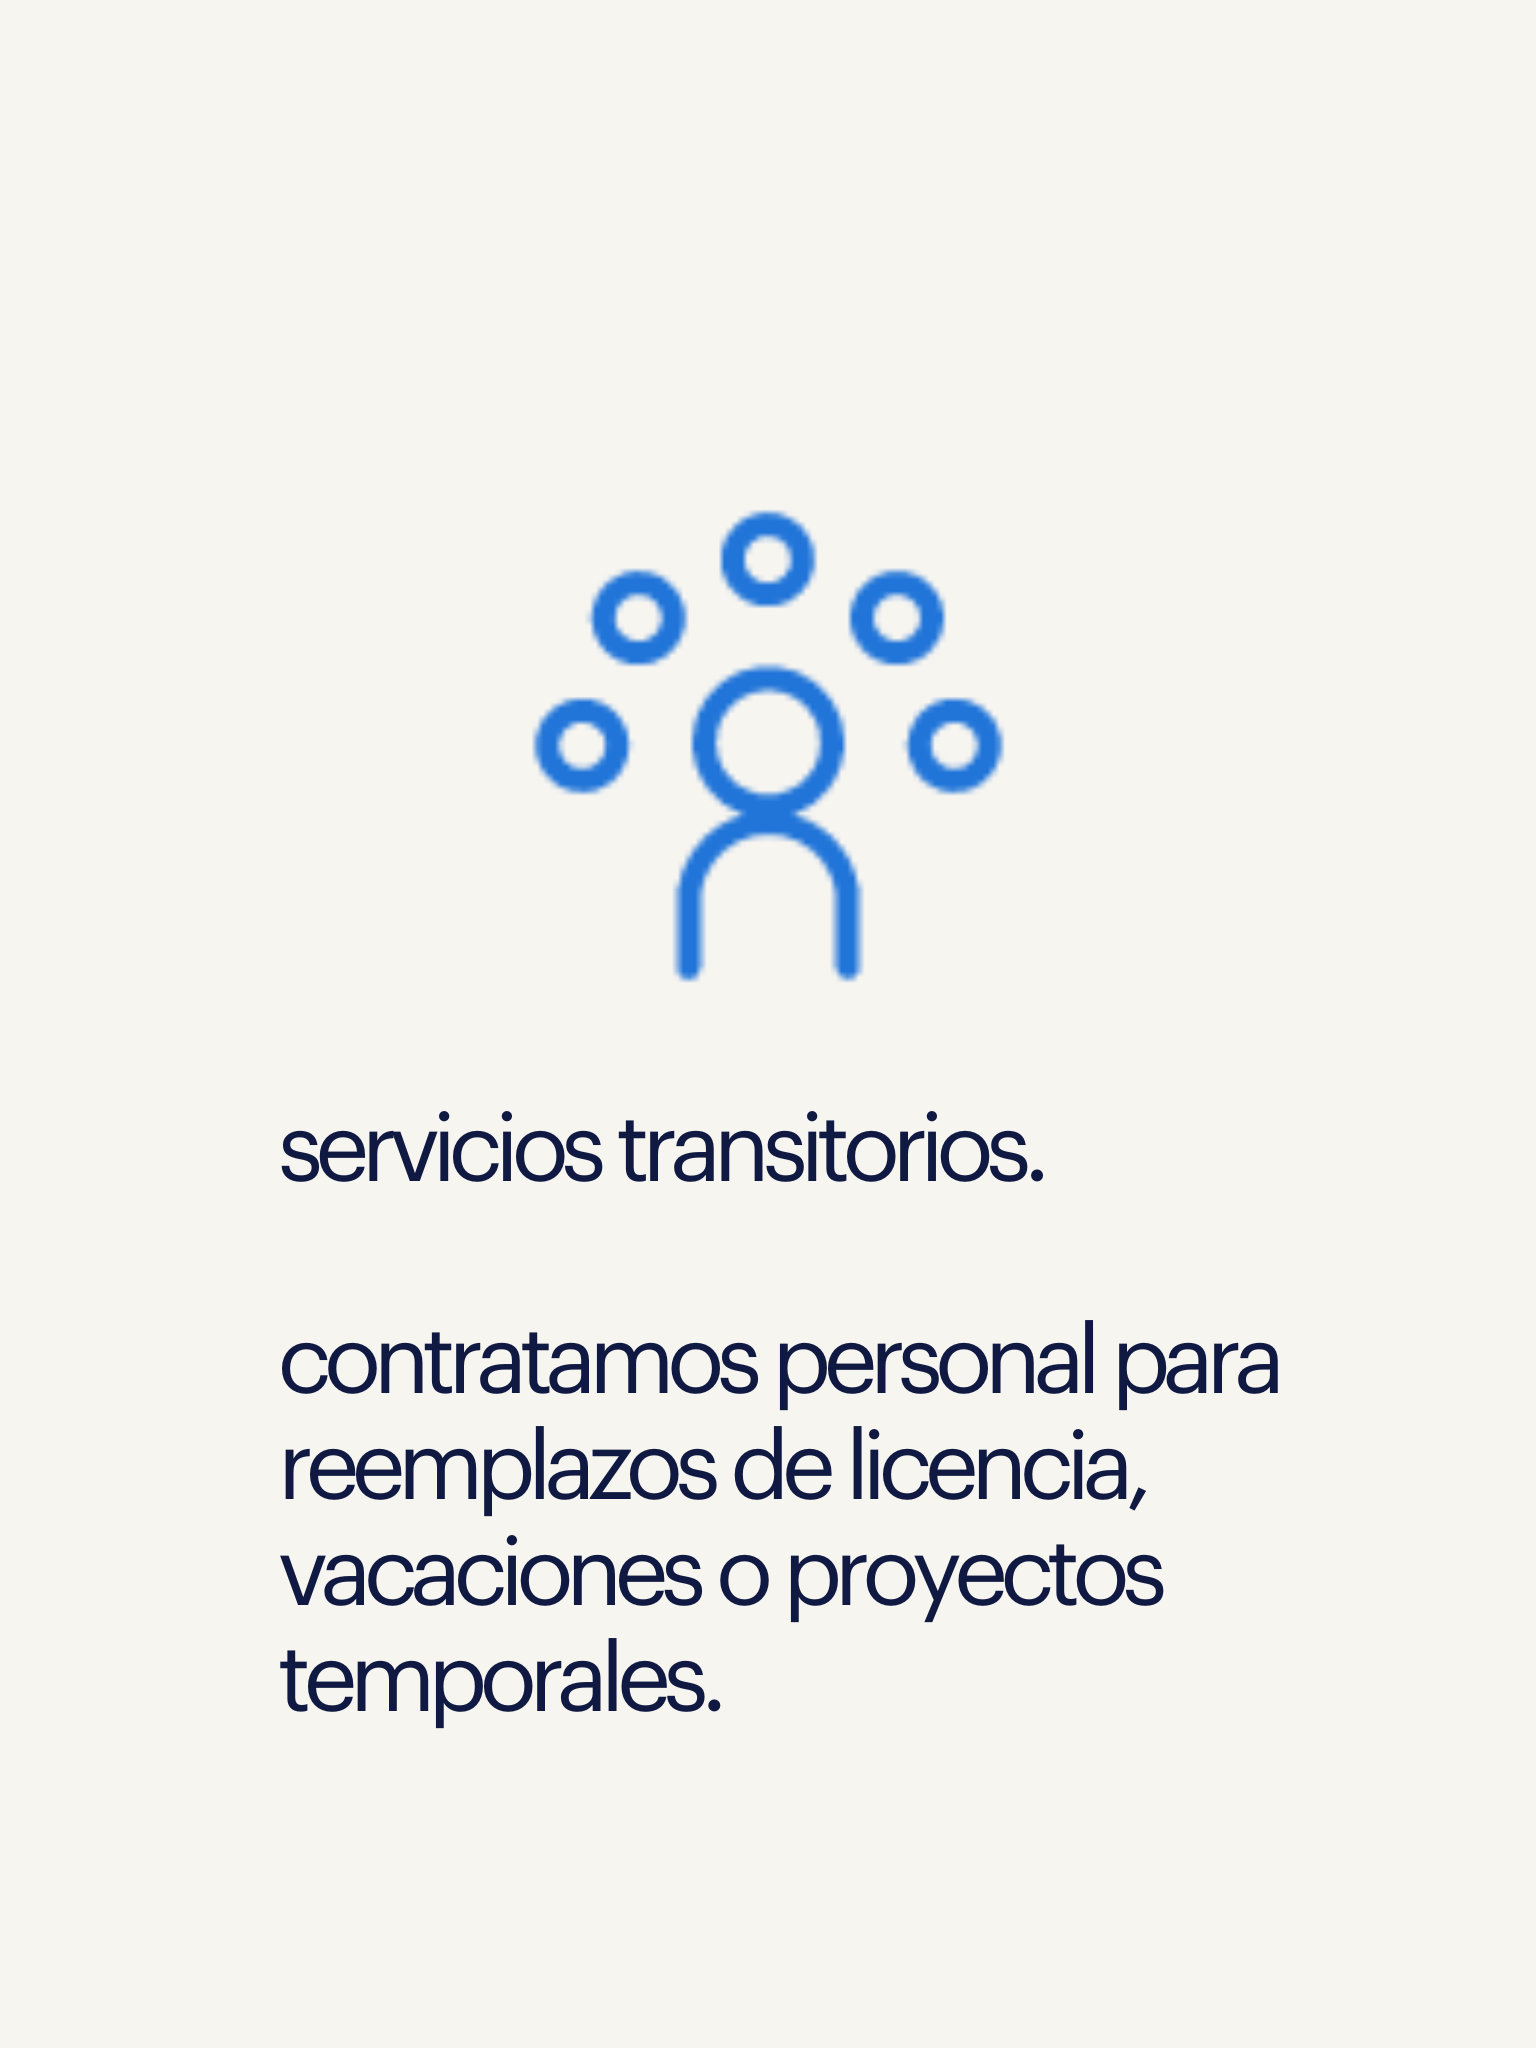 servicios transitorios chile